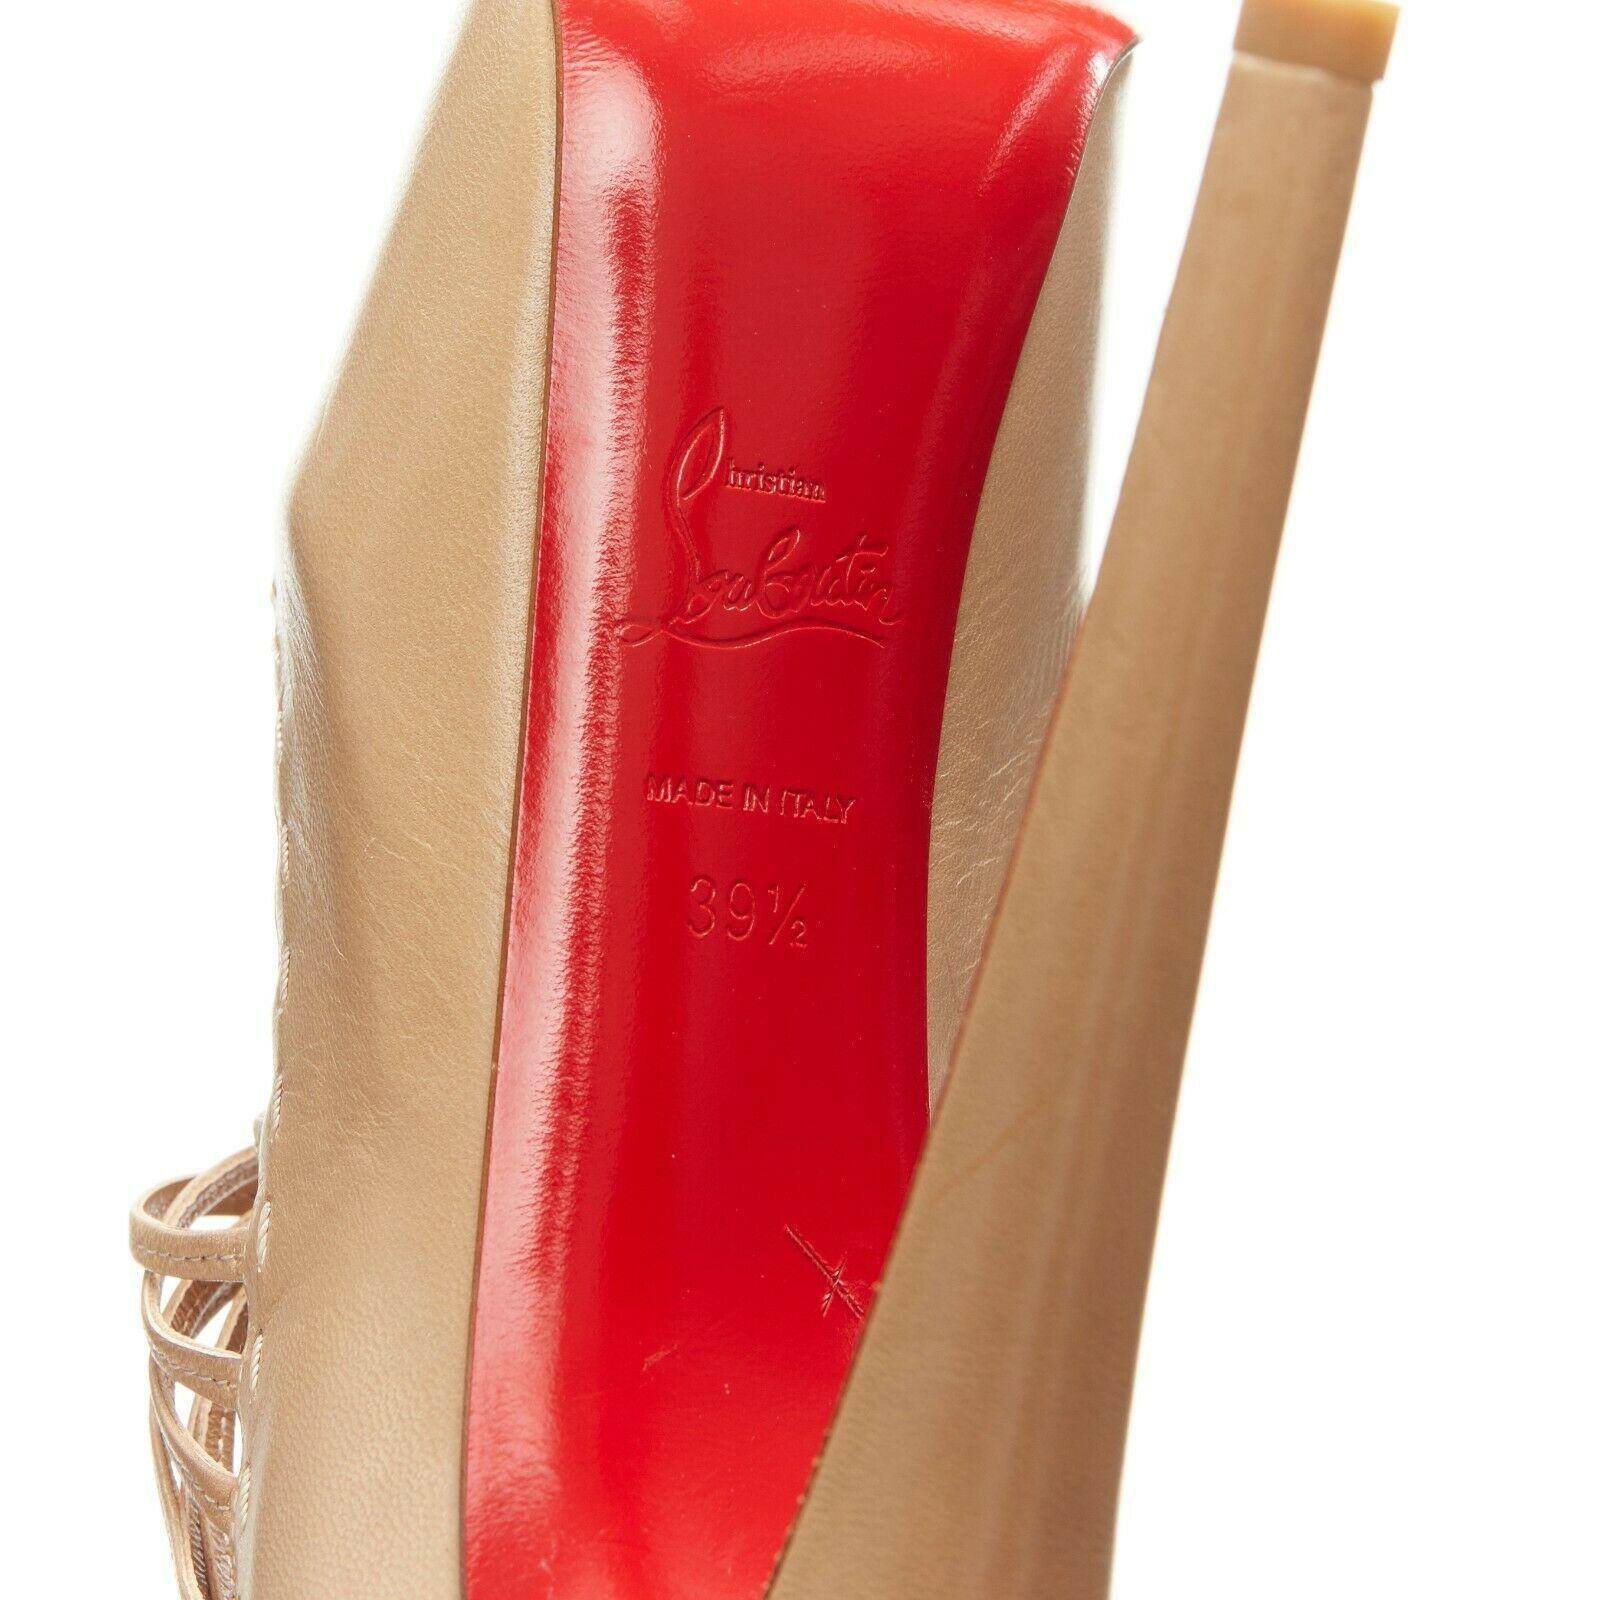 CHRISTIAN LOUBOUTIN Zoulou nude leather strappy peep toe platform pump EU39.5 3